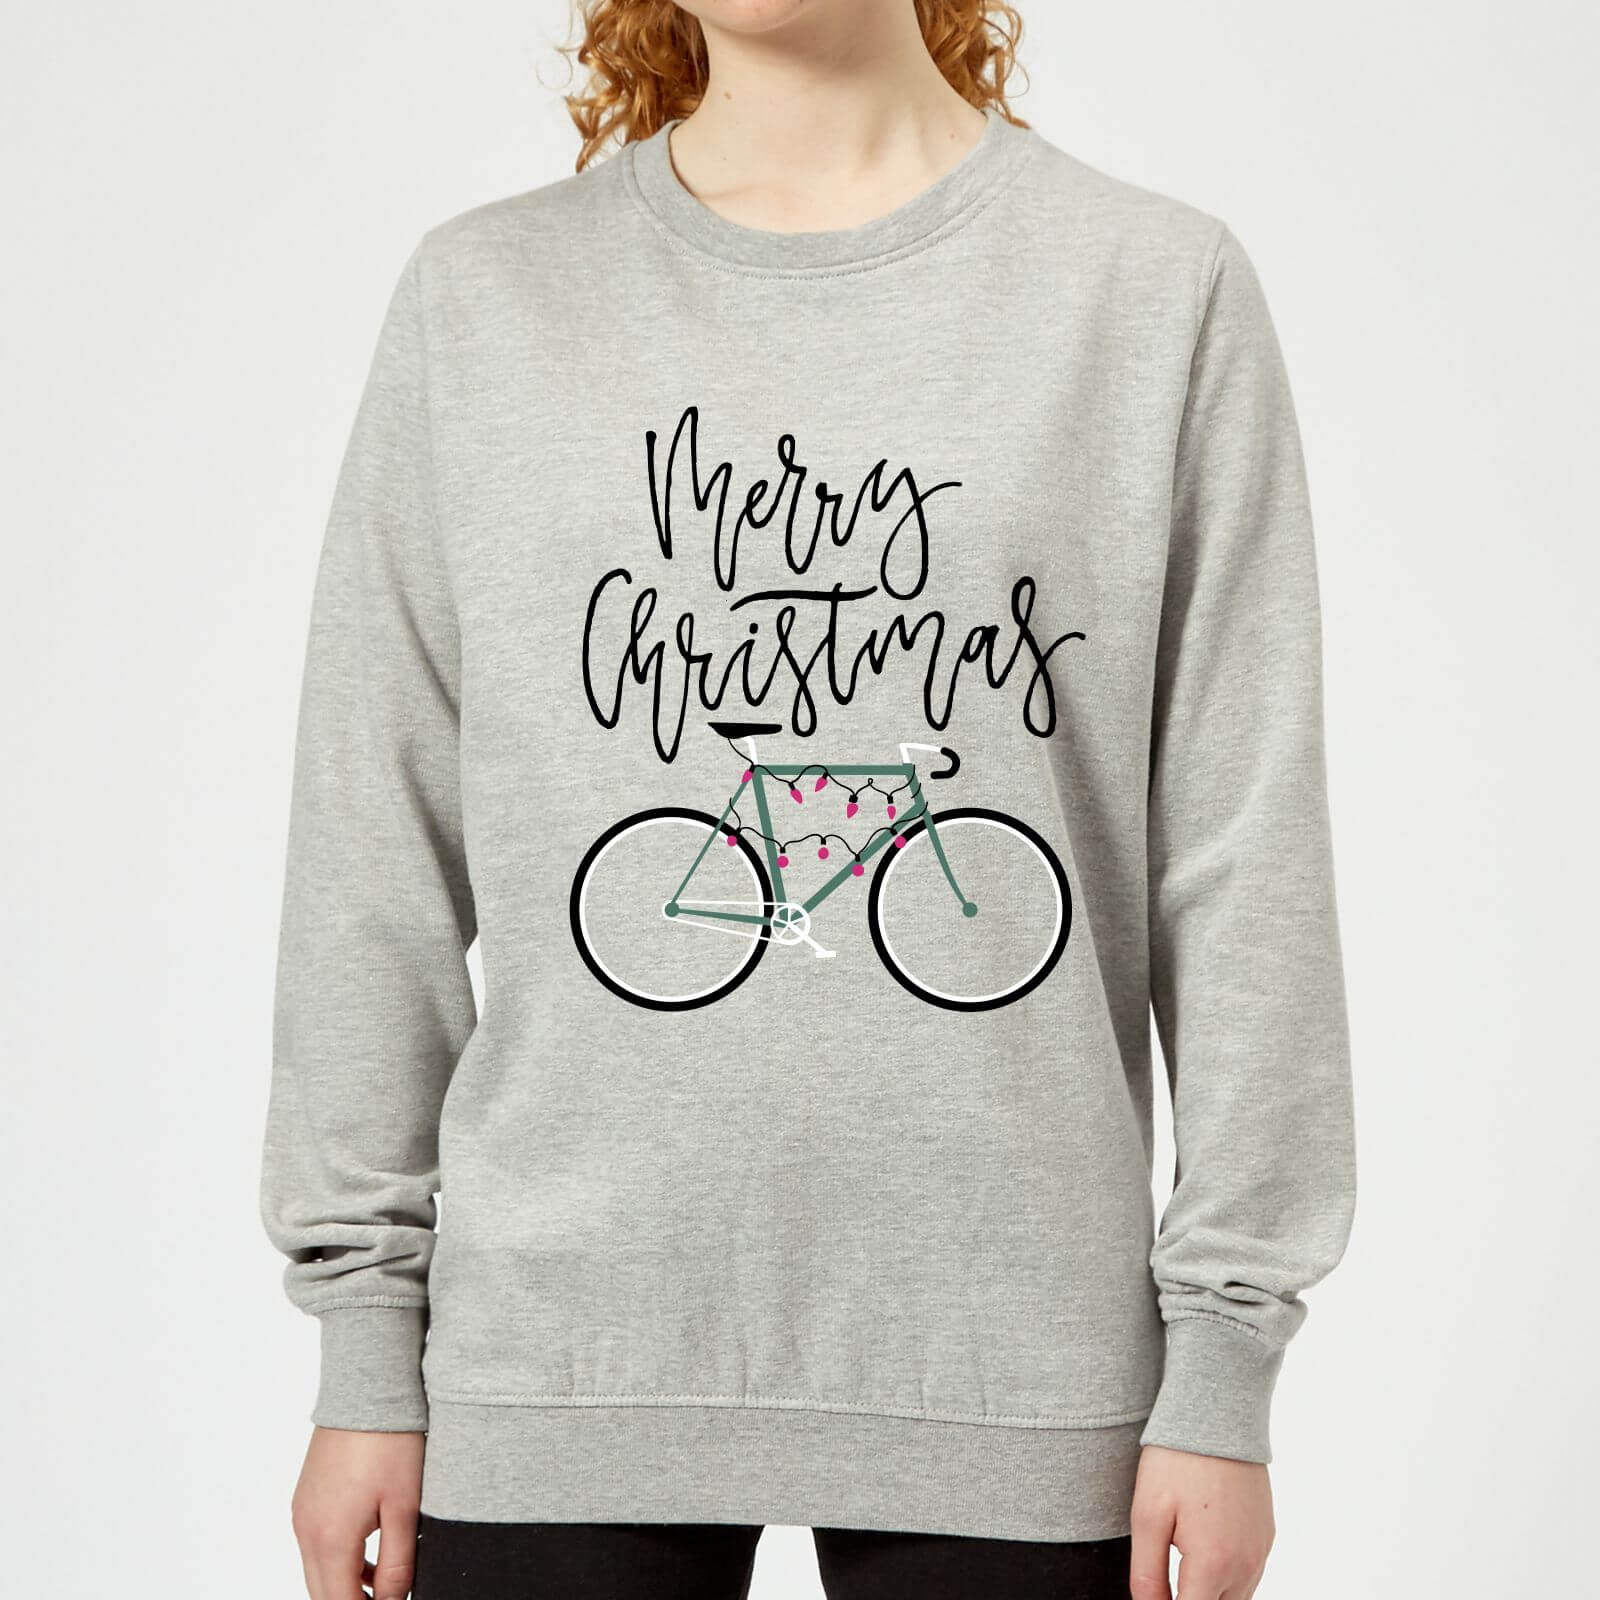 Bike Lights Women's Christmas Sweatshirt - Grey - XXL - Grey